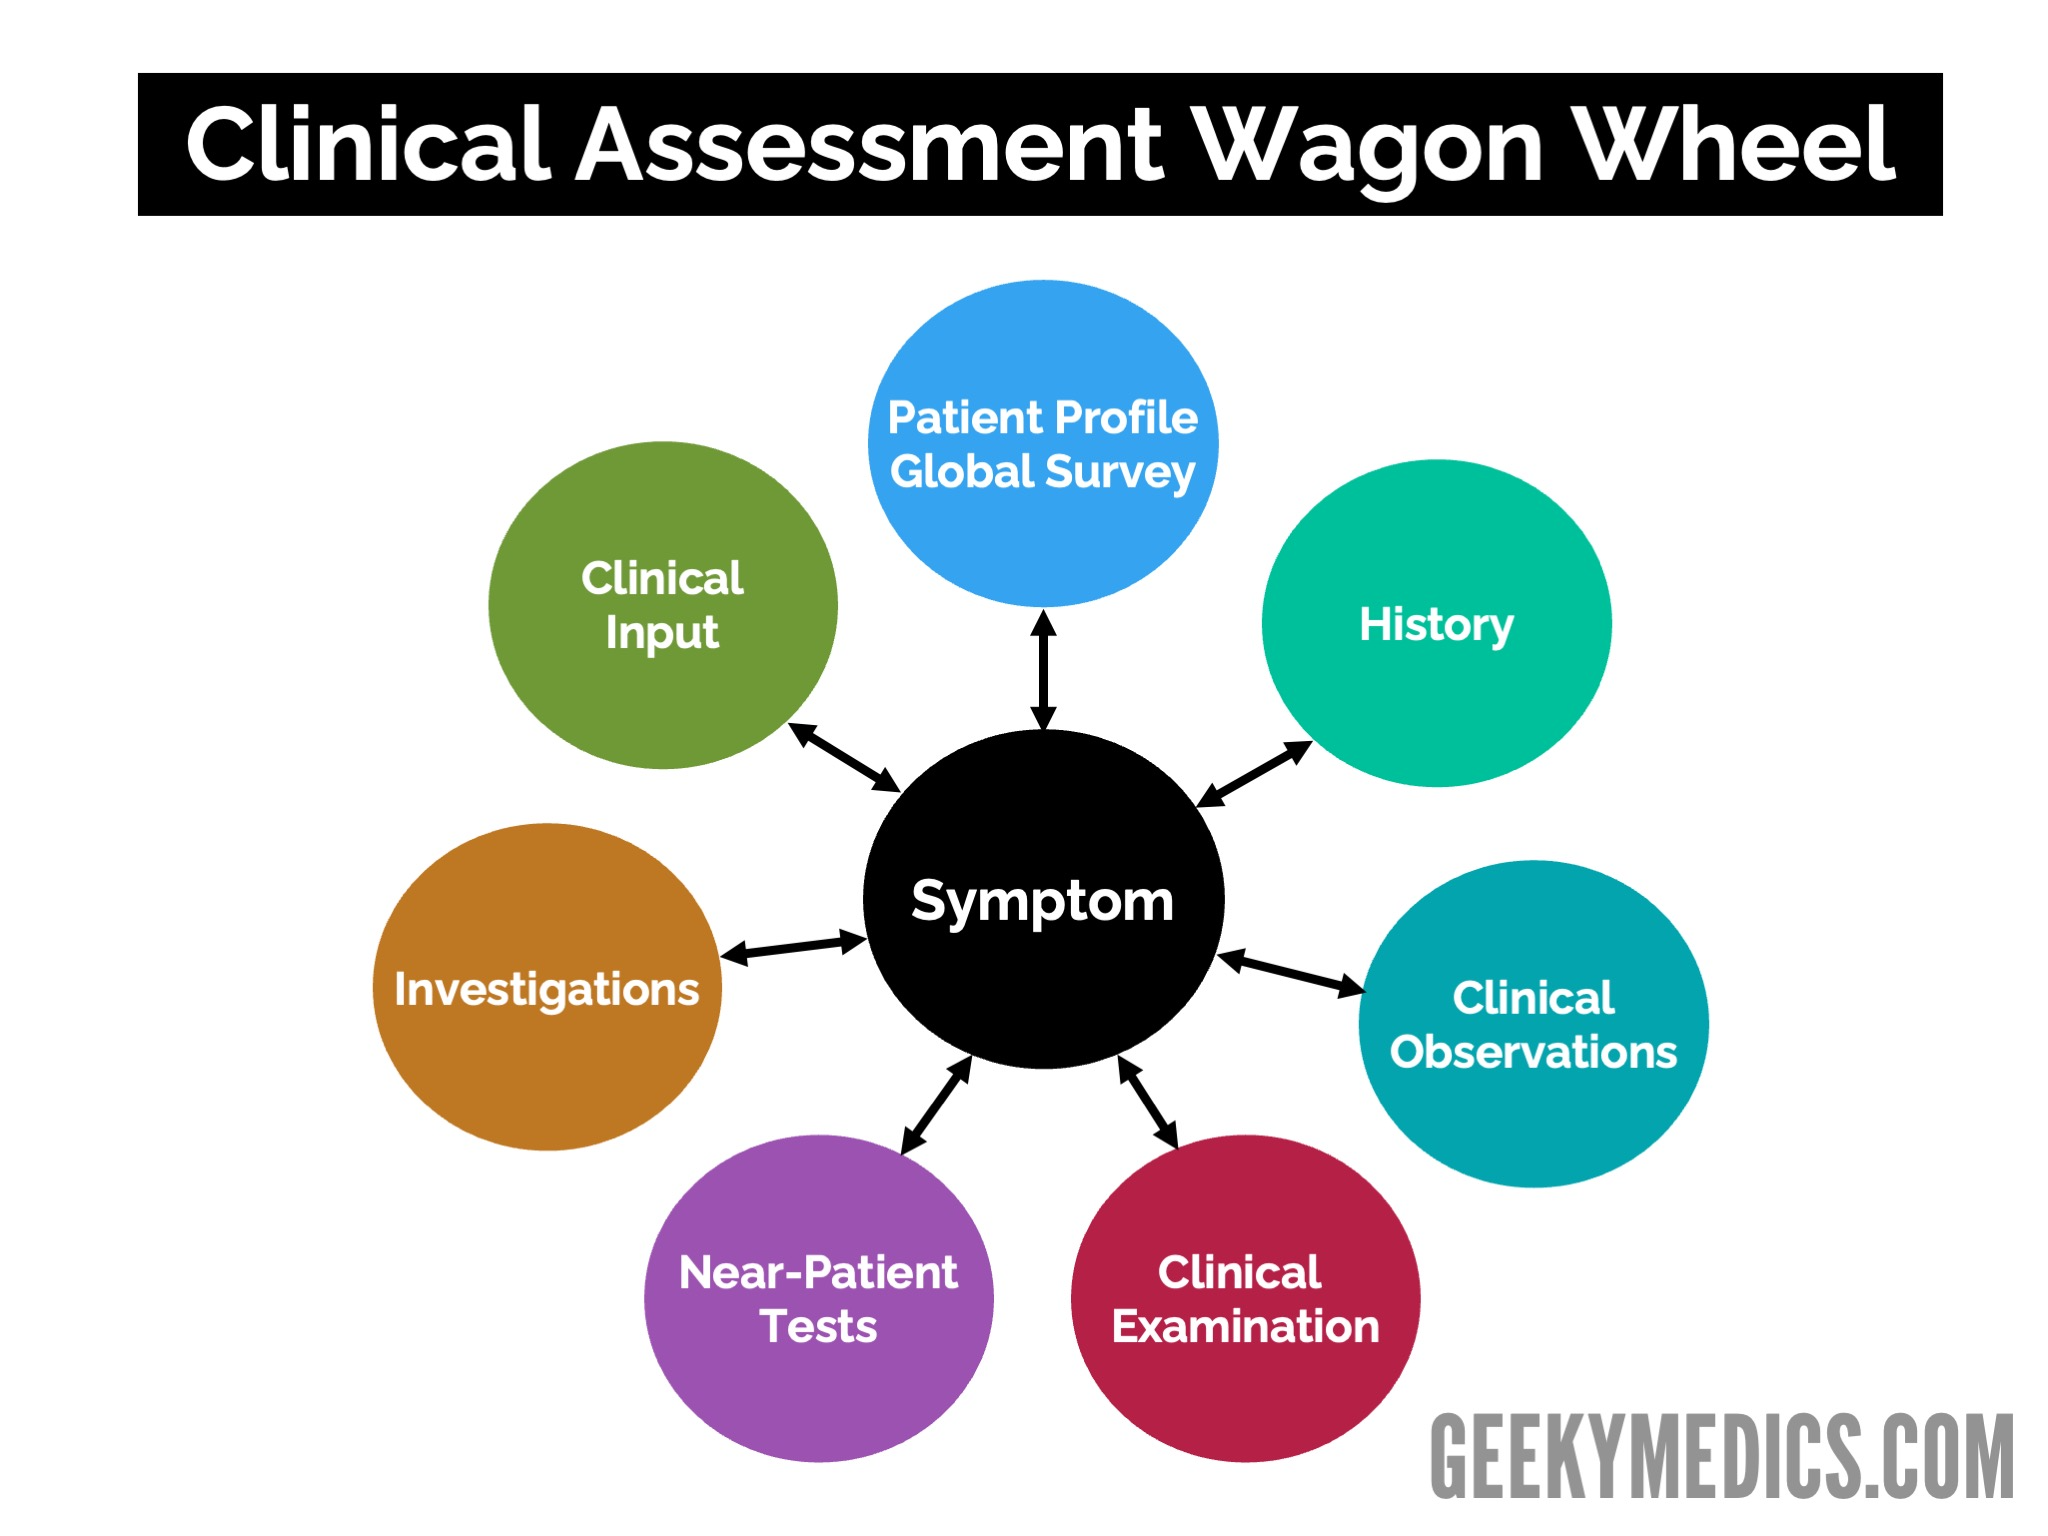 Clinical assessment wagon wheel